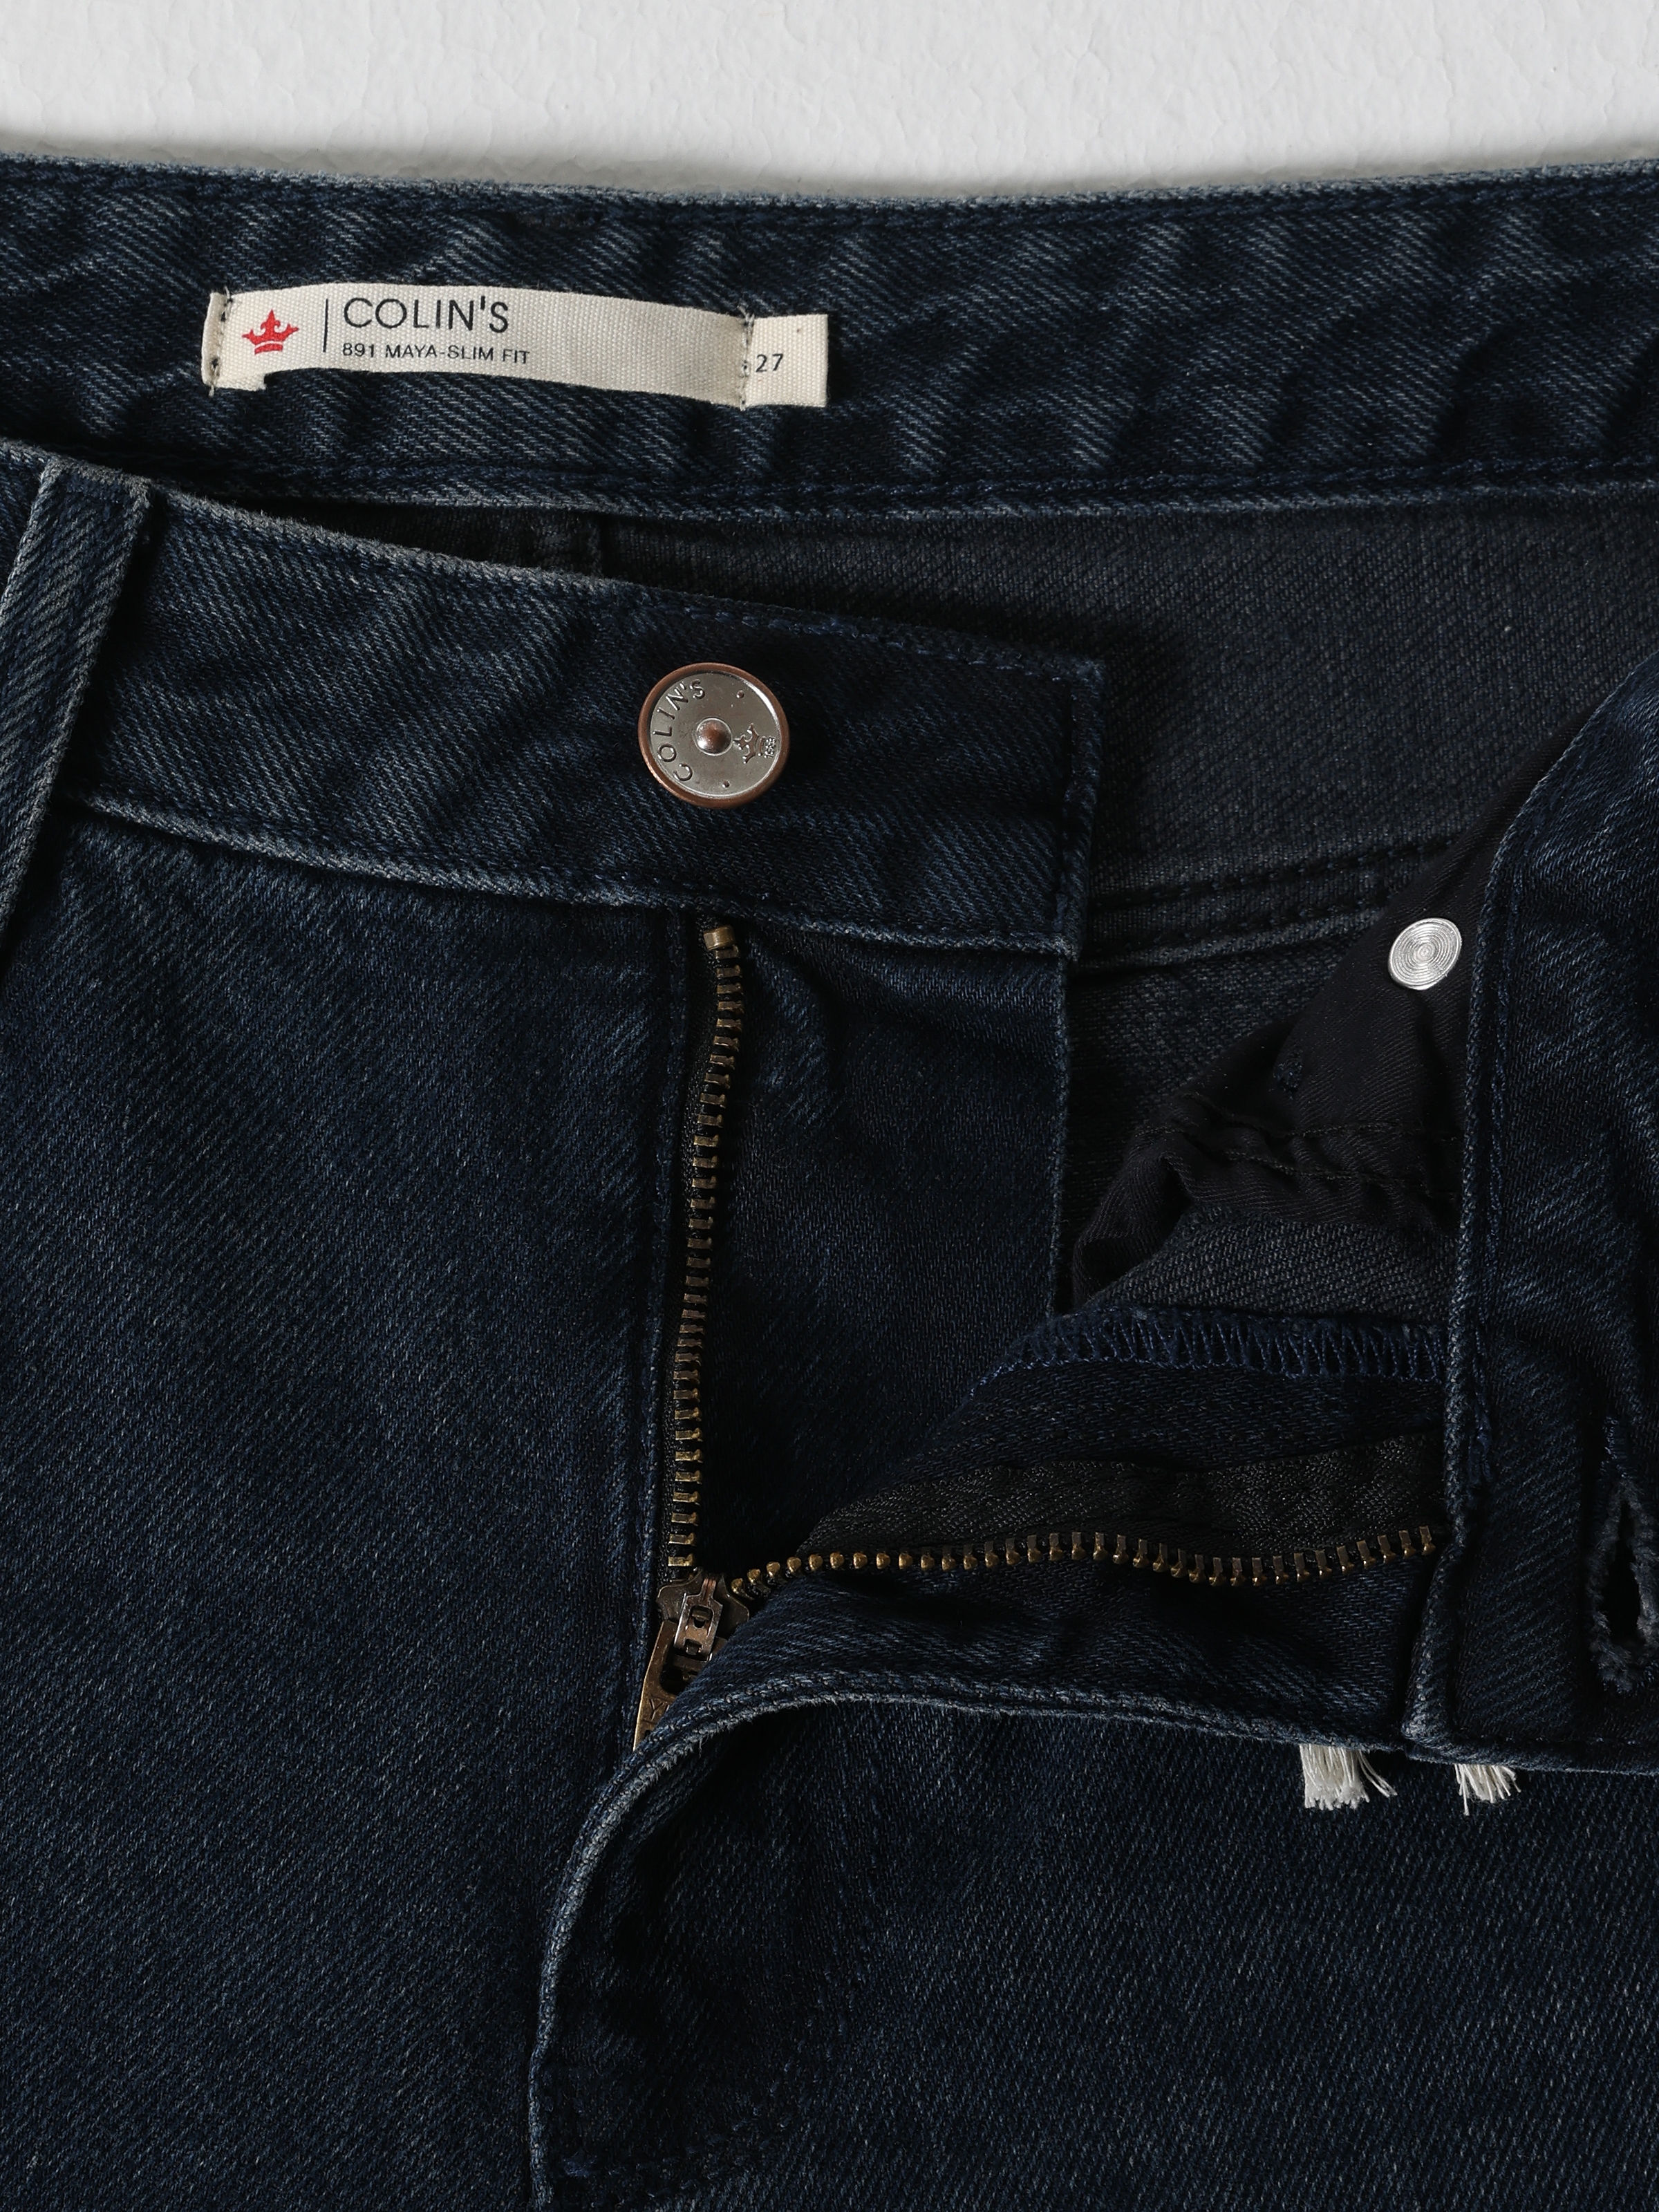 Colins 891 Maya Slim Fit Orta Bel Daralan Paça Koyu Mavi Kadın Pantolon. 8